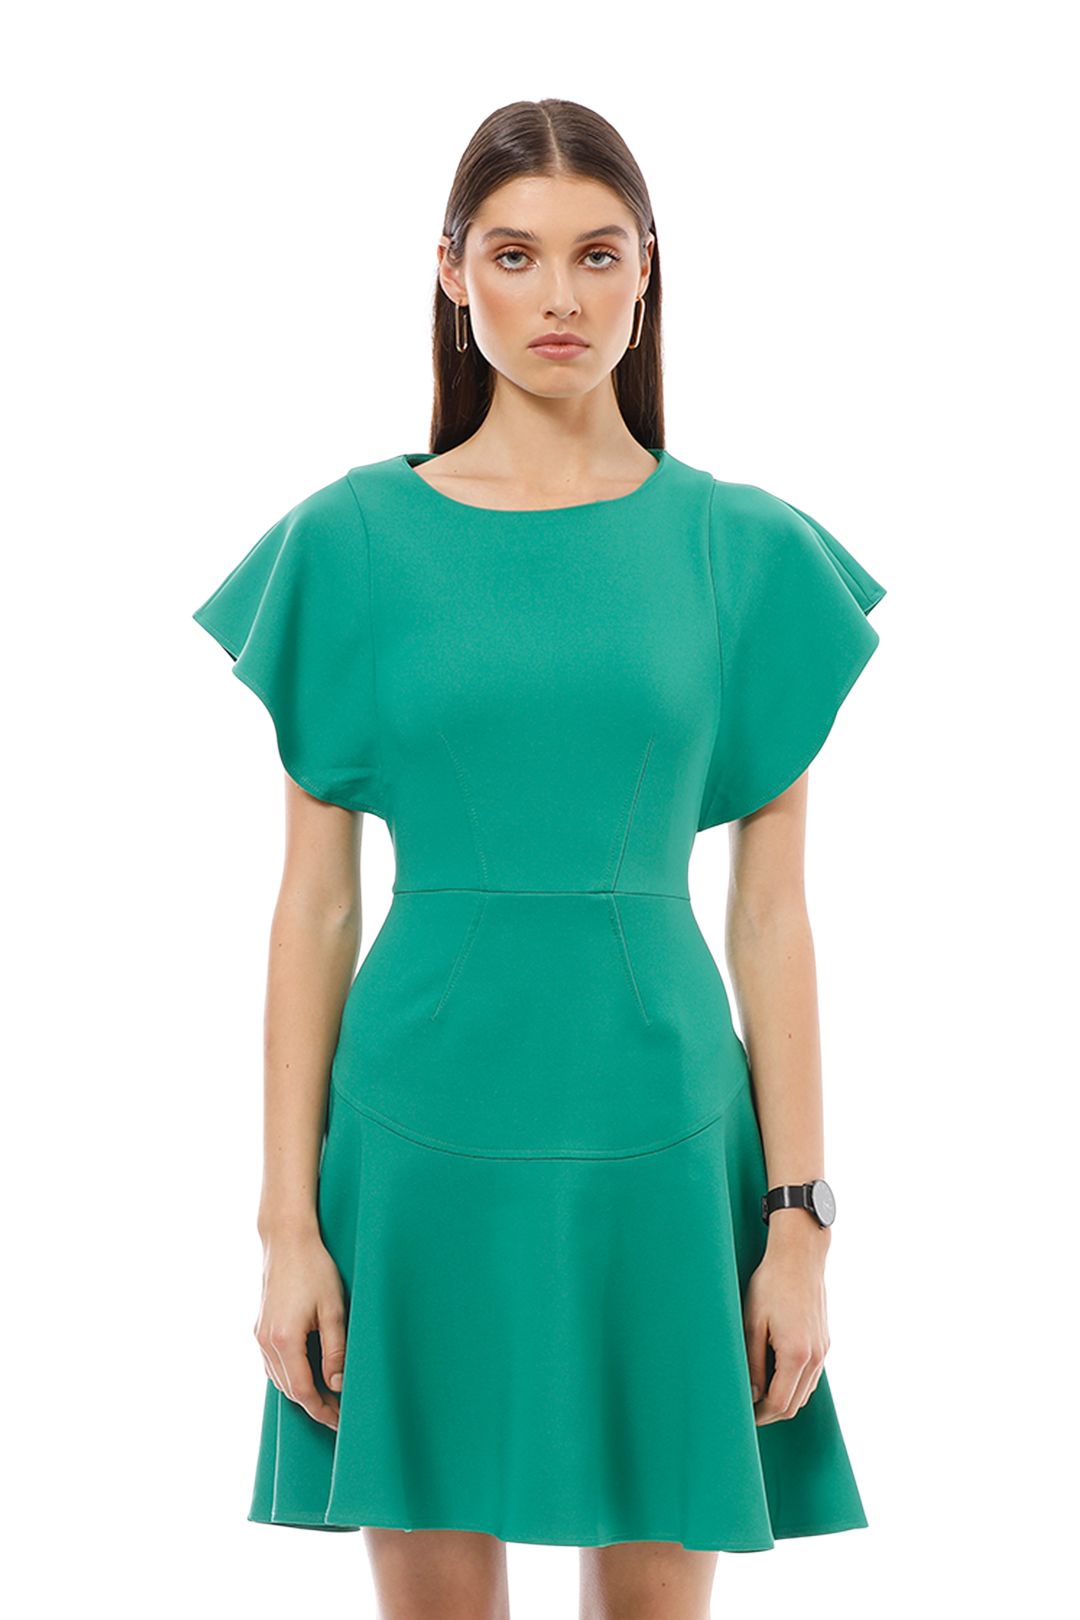 Closet London - Frill Sleeve Flared Dress - Green - Close Up